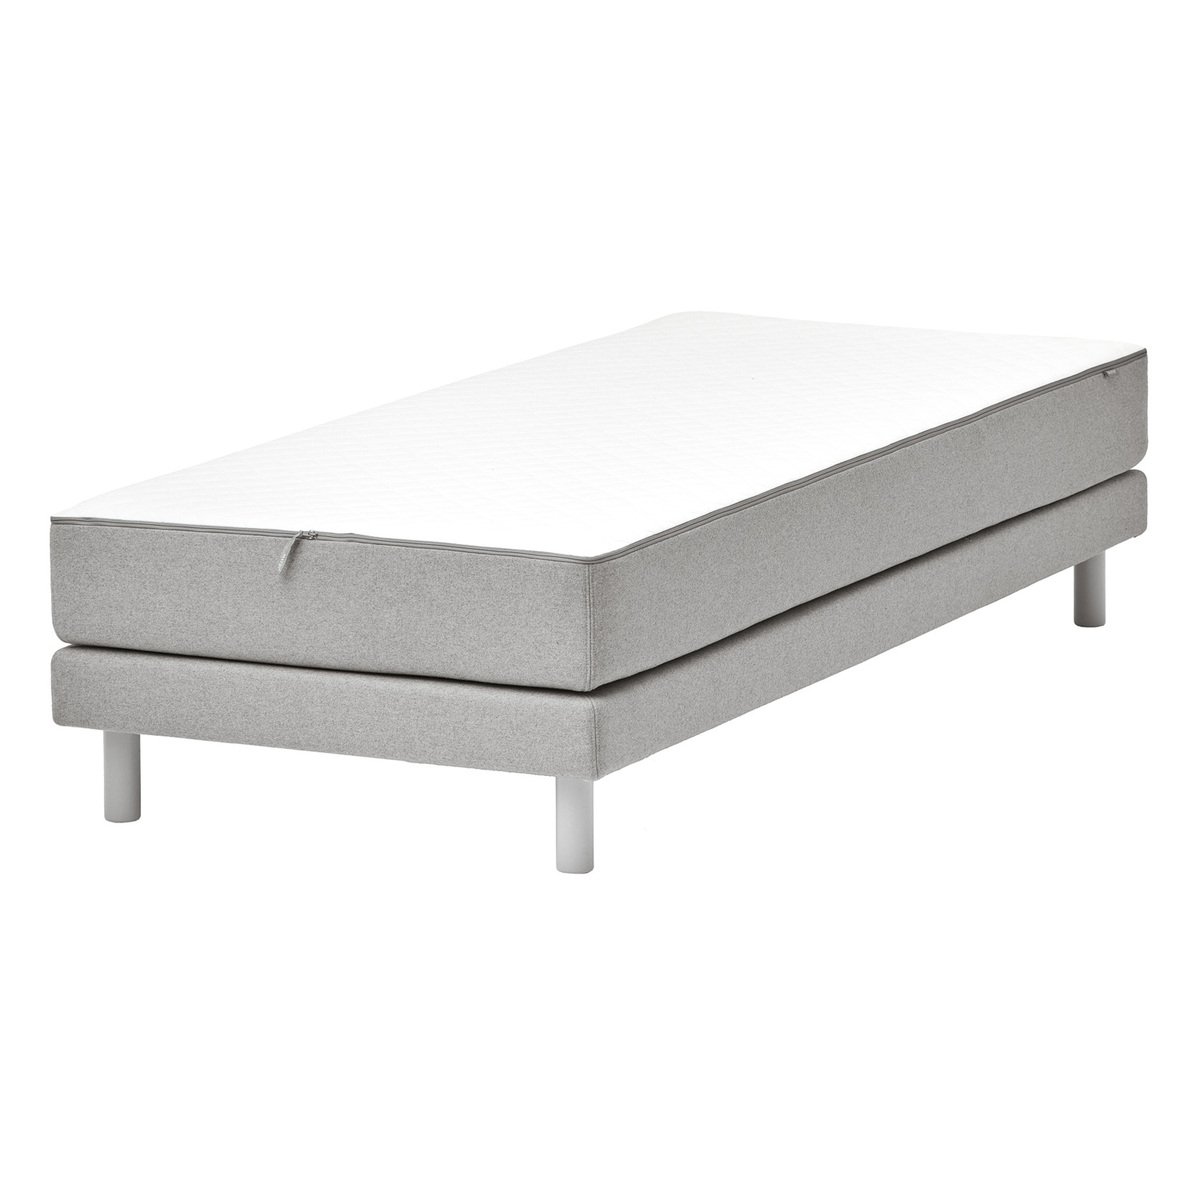 Aina bed, 120 x cm, grey | Finnish Design Shop